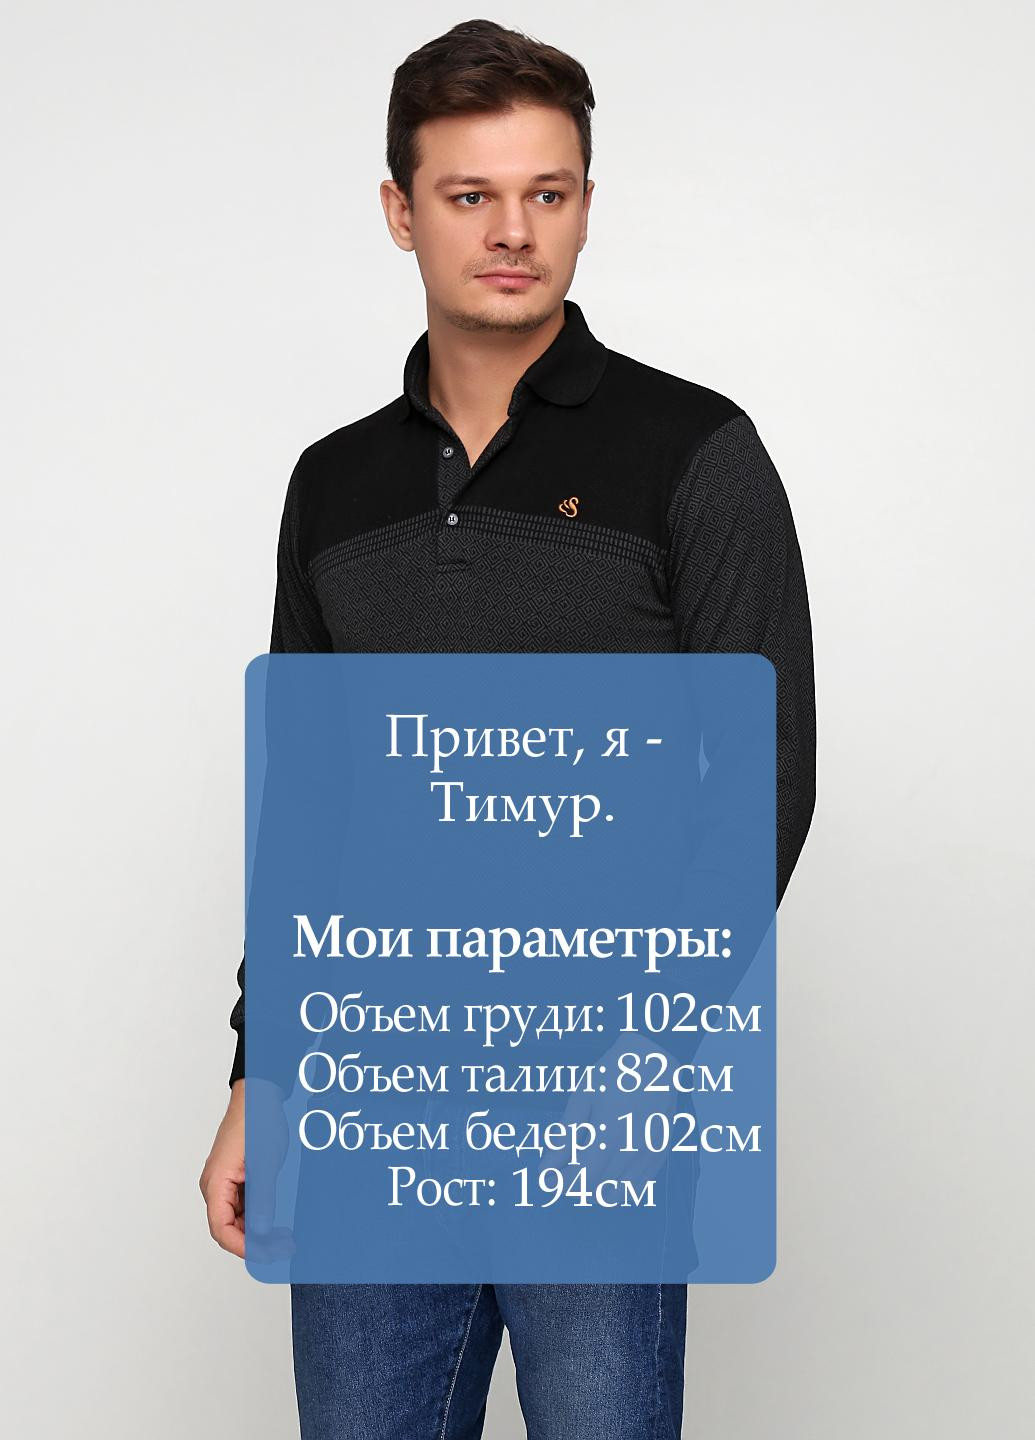 Черная футболка-поло для мужчин Sayfa с геометрическим узором